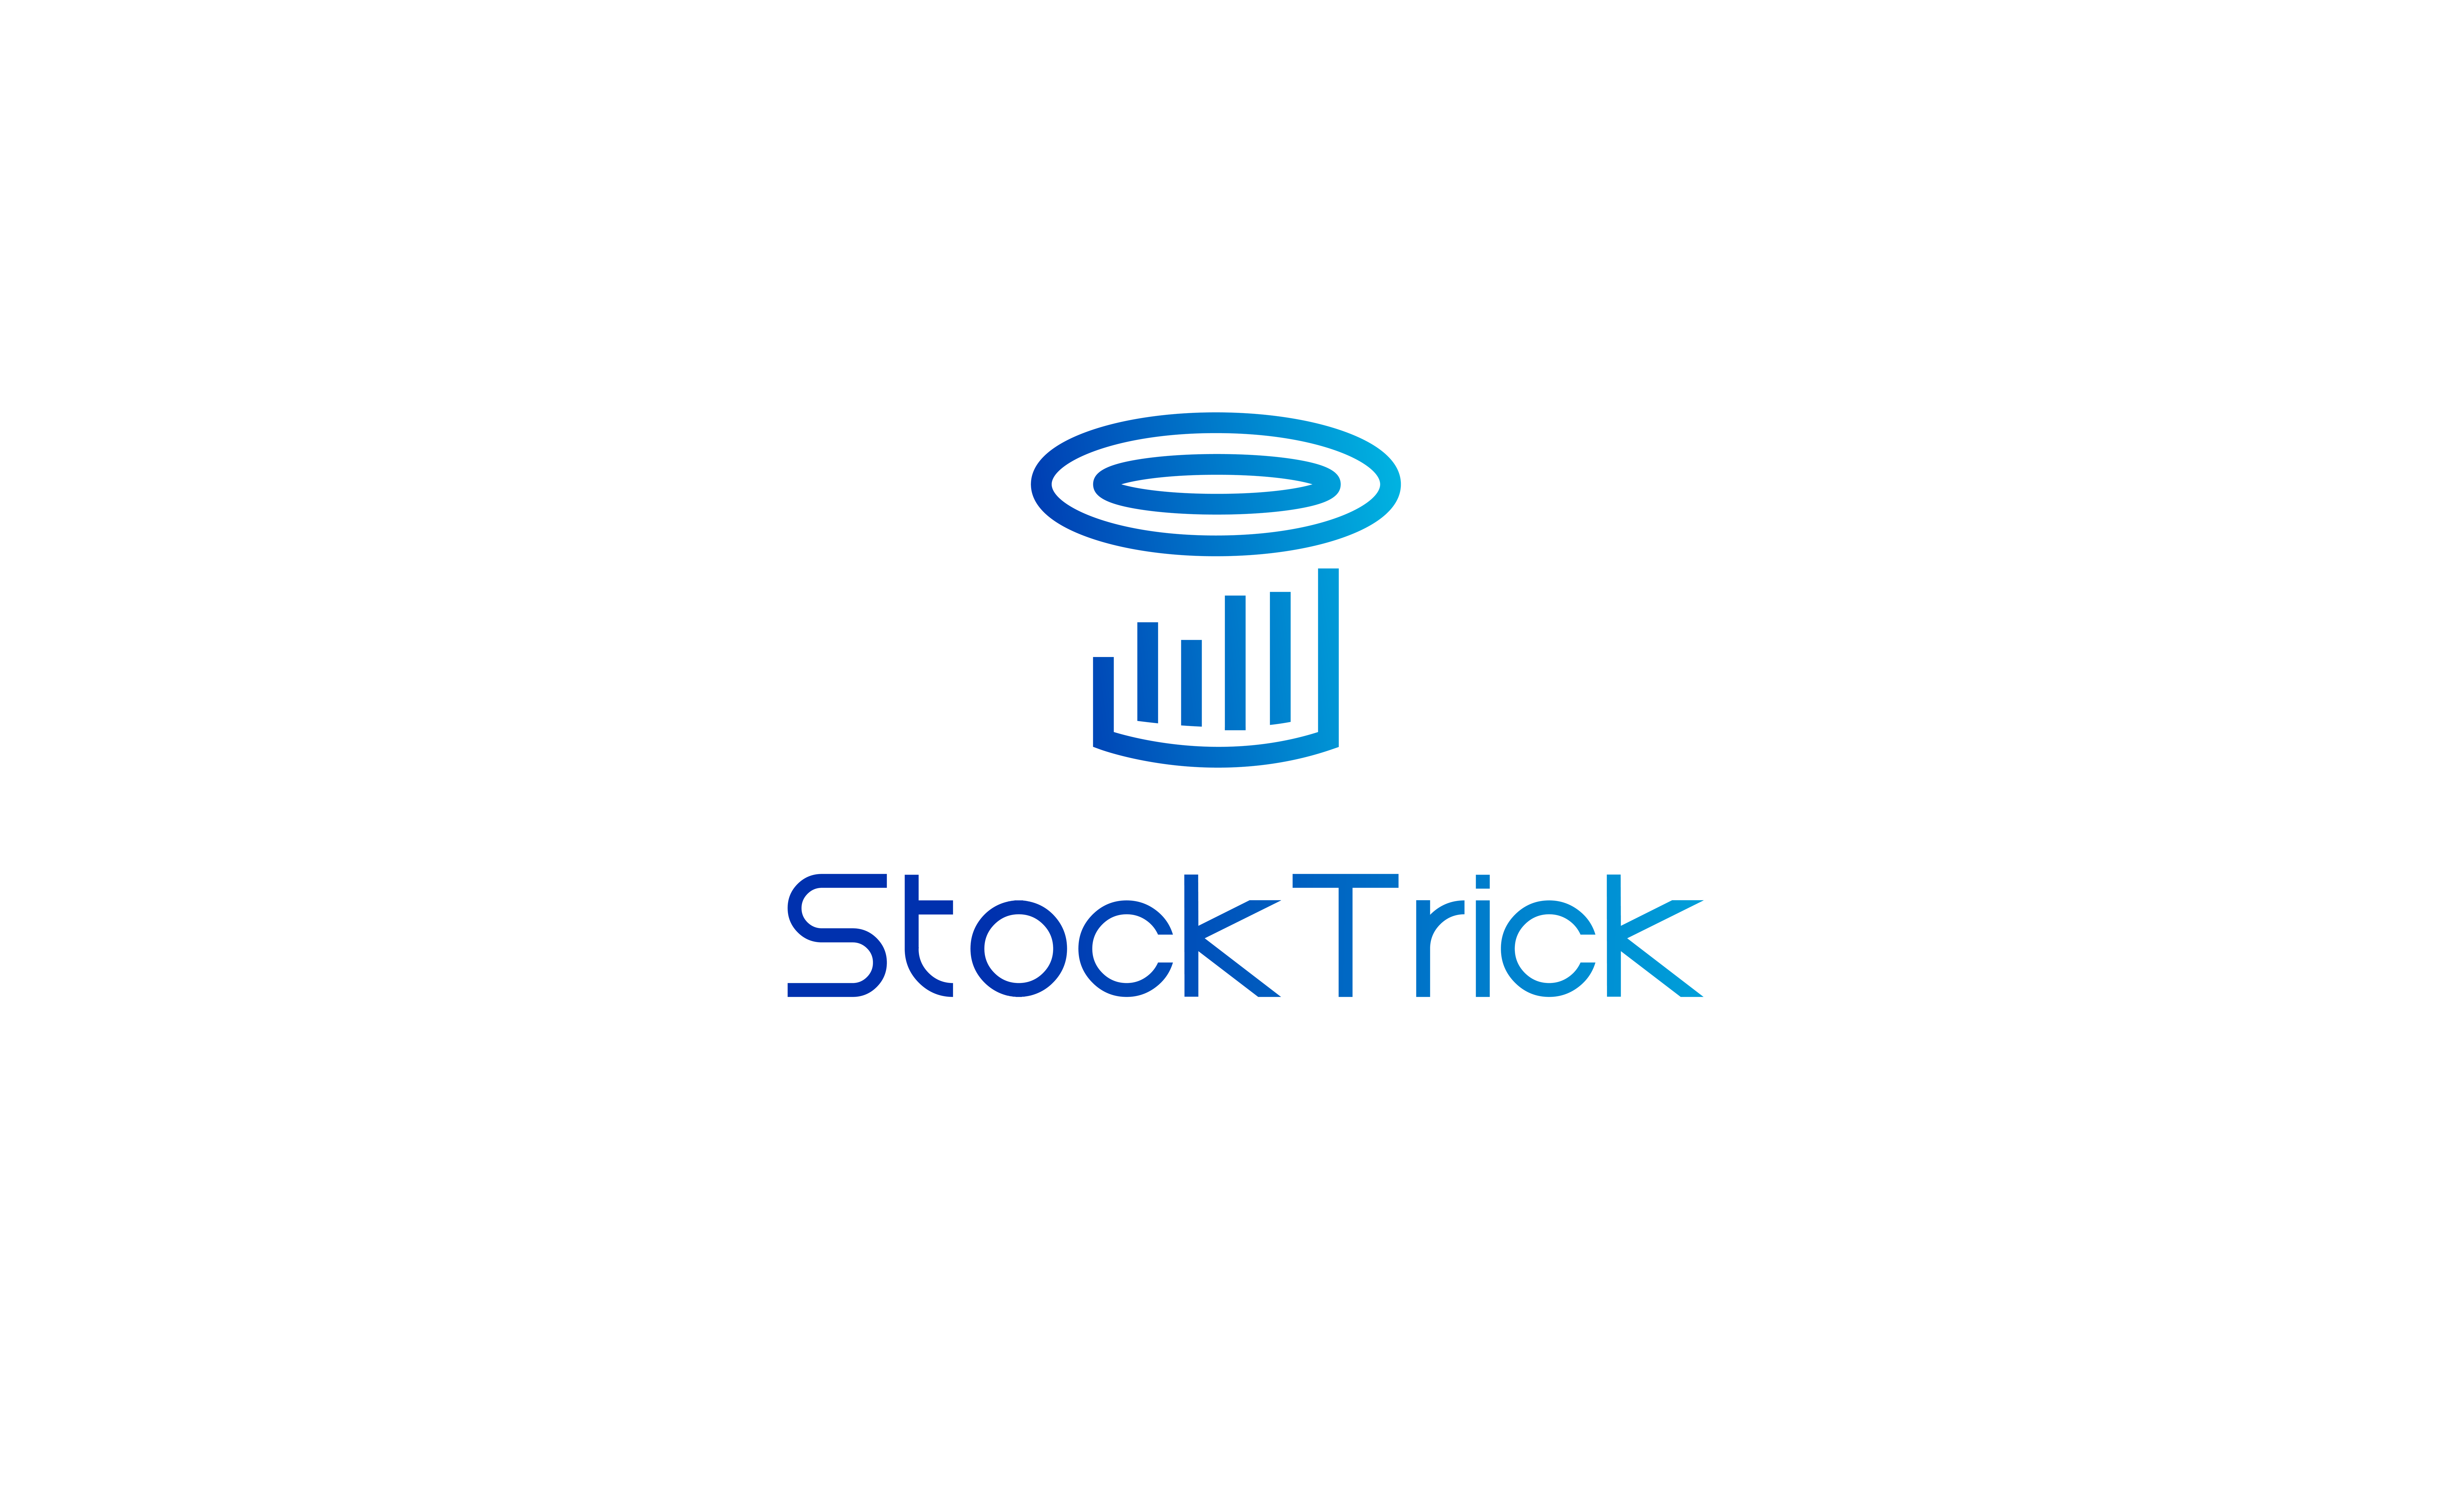 StockTrick